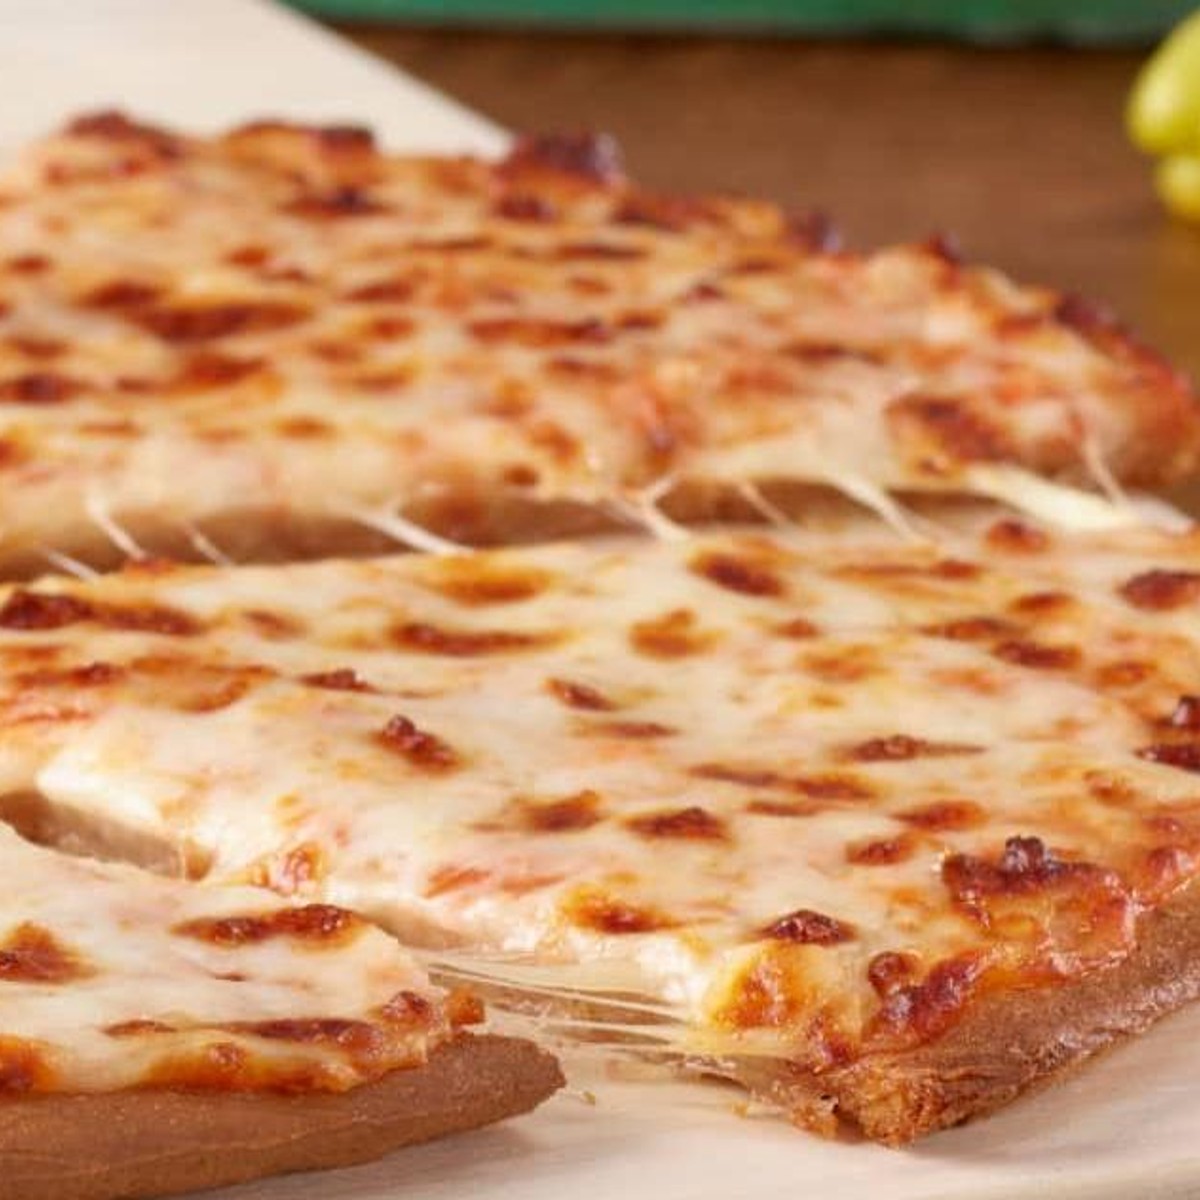 Papadias - The Delicious Pizza Sandwich Calzone Combo